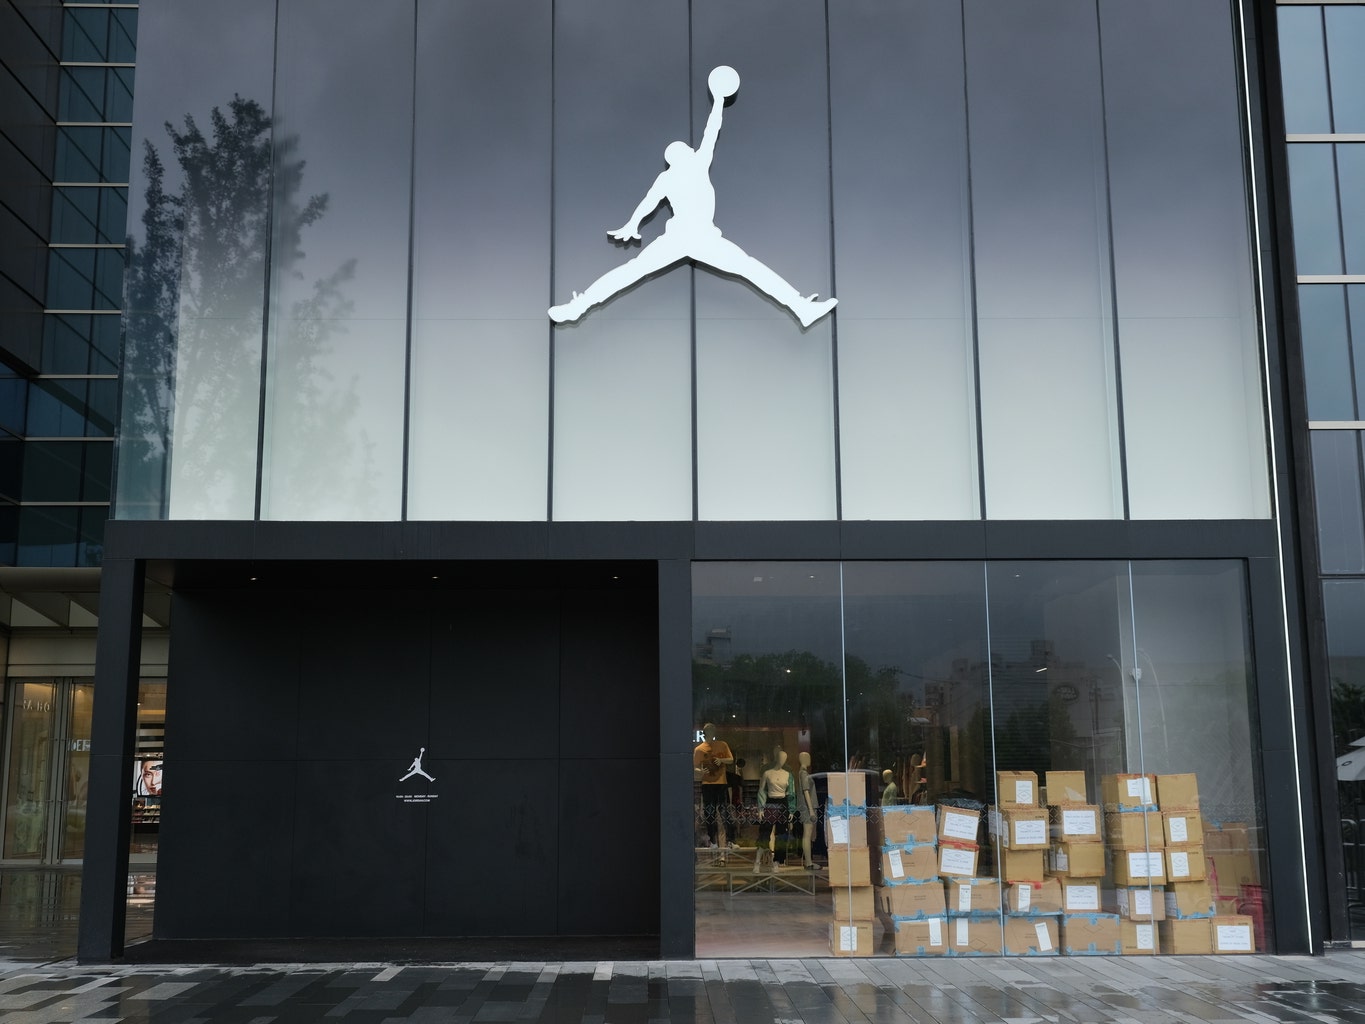 Nike shares `Air' movie could spark buzz for Jordan brand analyst | Seeking Alpha